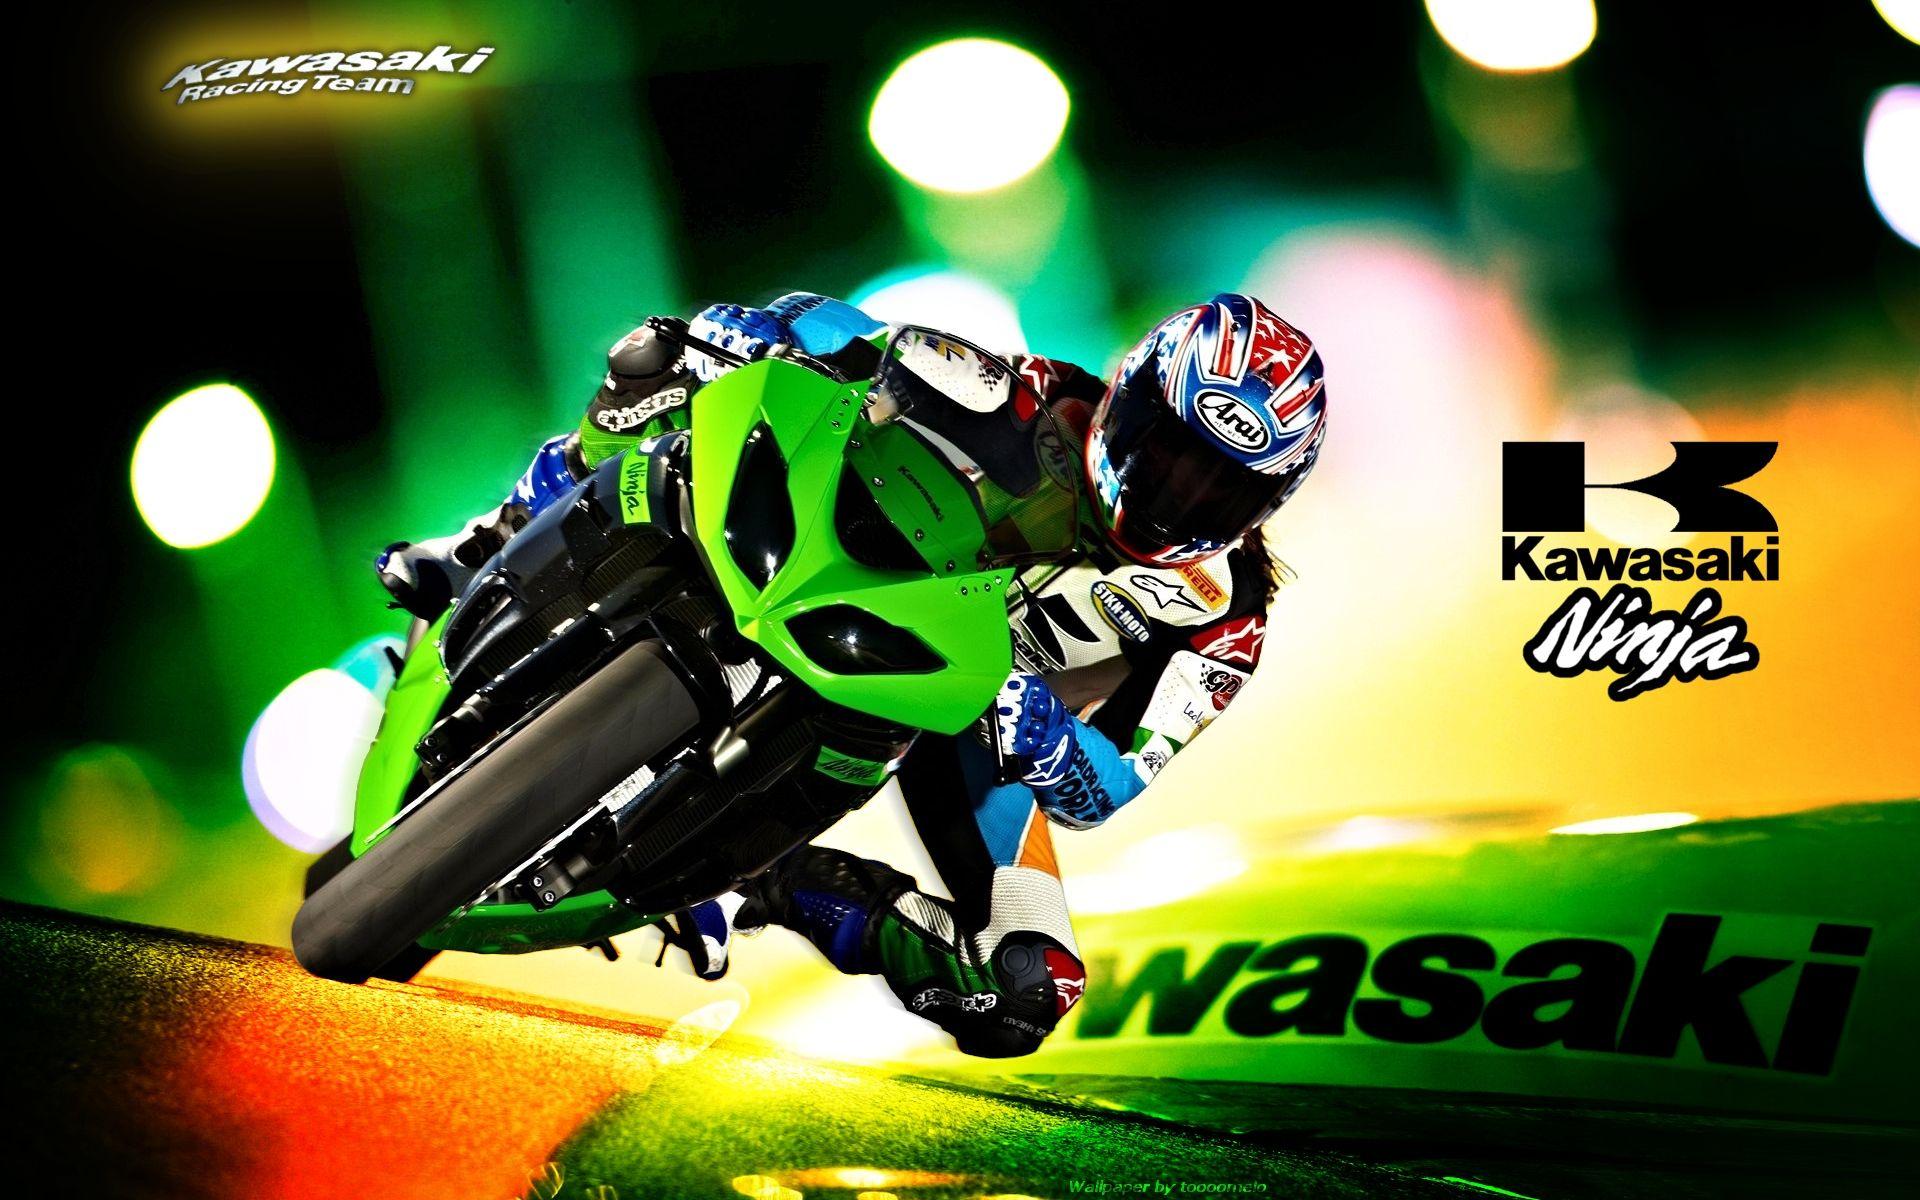 Download Kawasaki Background amp Kawasaki Ninja Wallpaper